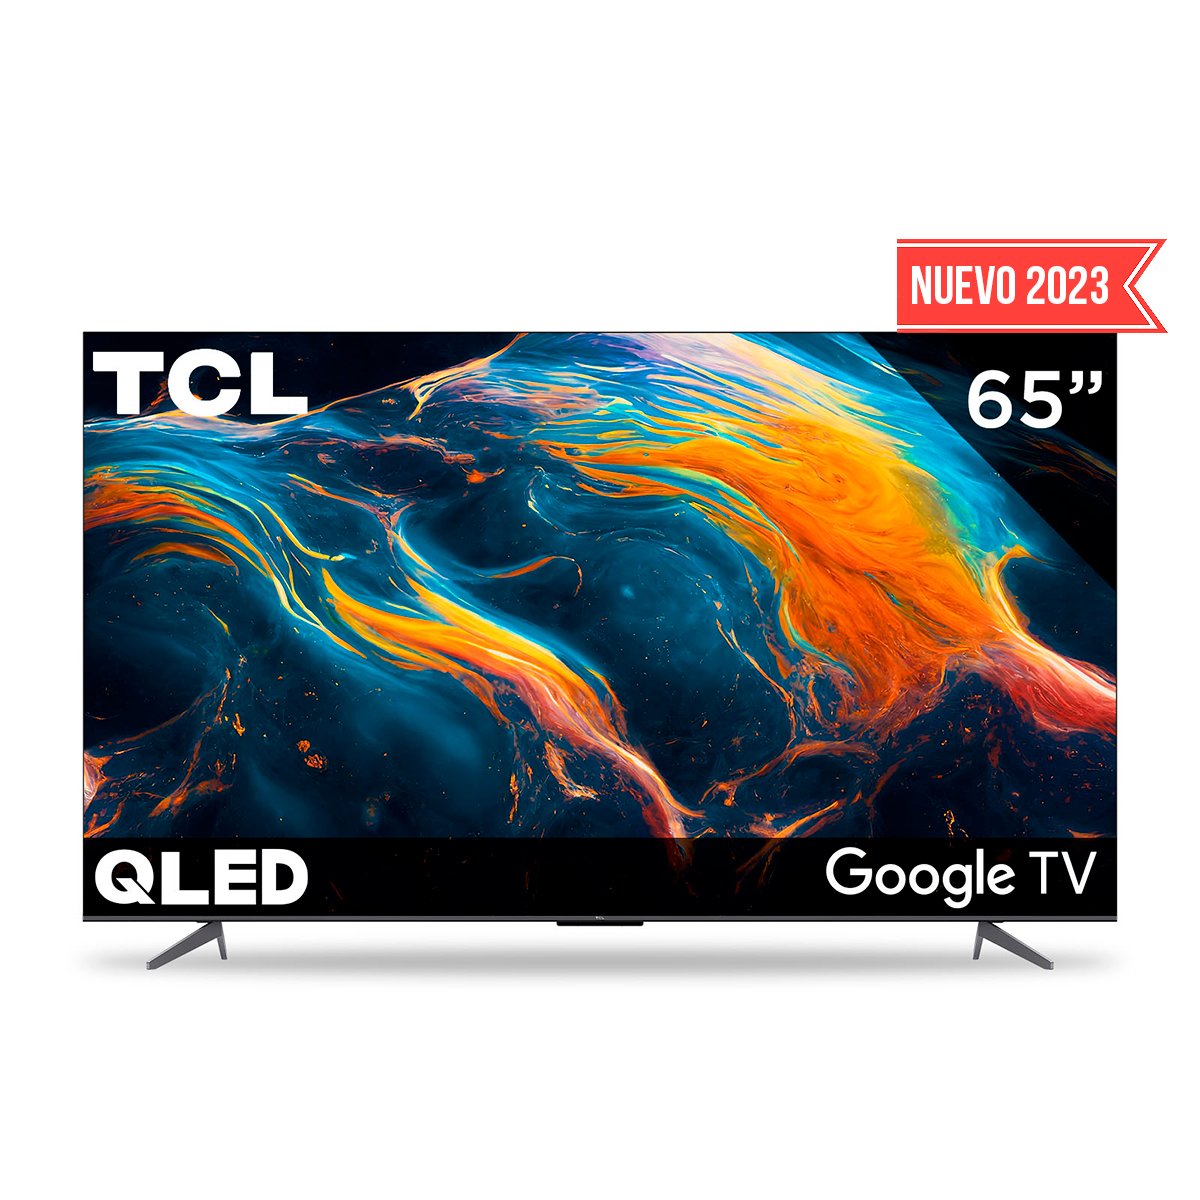 Pantalla TCL 65 QLED 4K HDR Google TV 65Q650G Smart TV